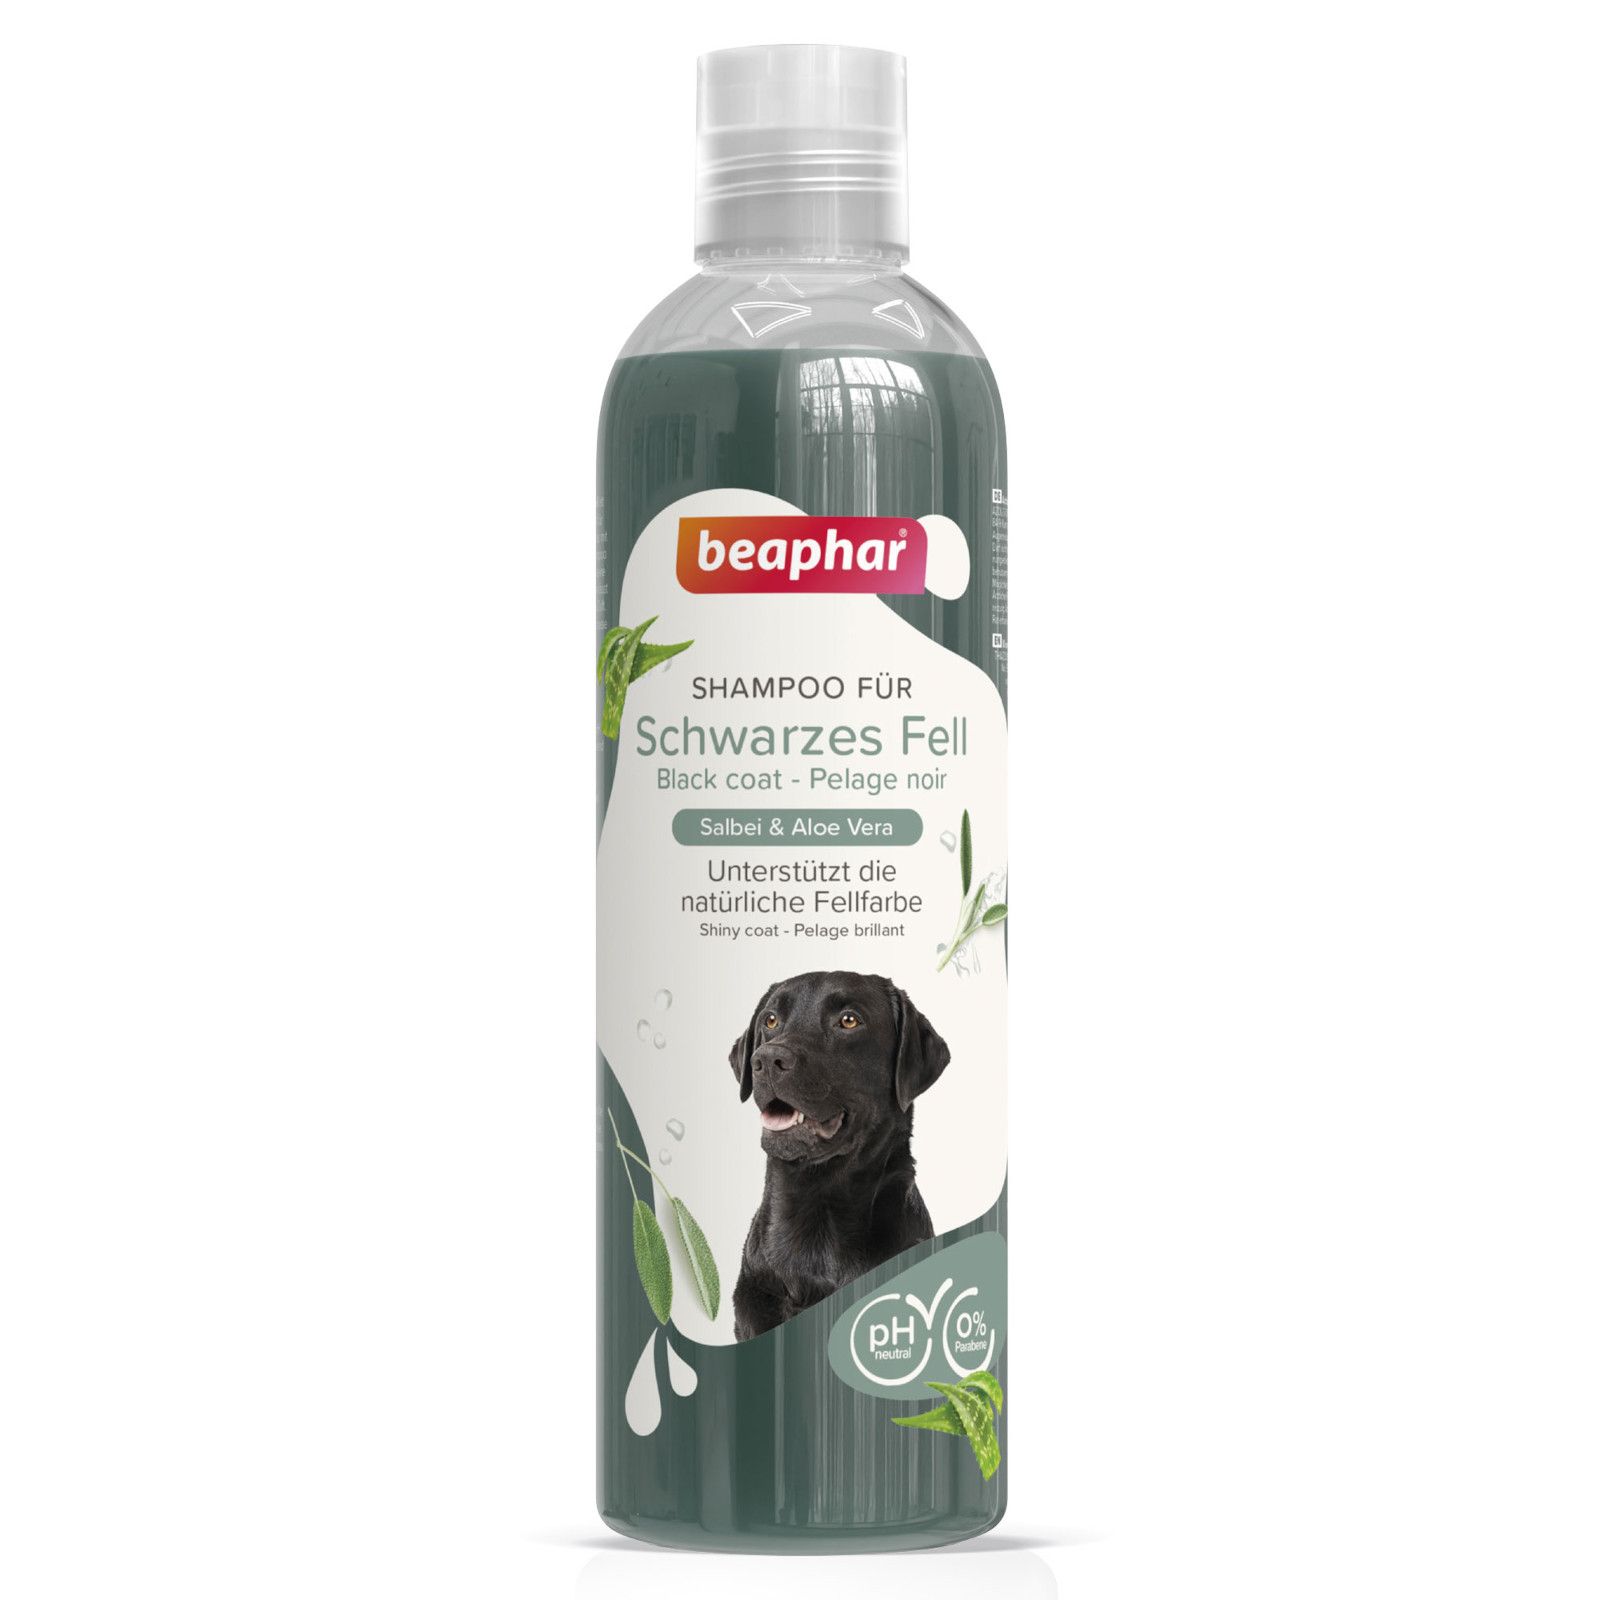 Beaphar - Hunde Shampoo für schwarzes Fell 250 ml 